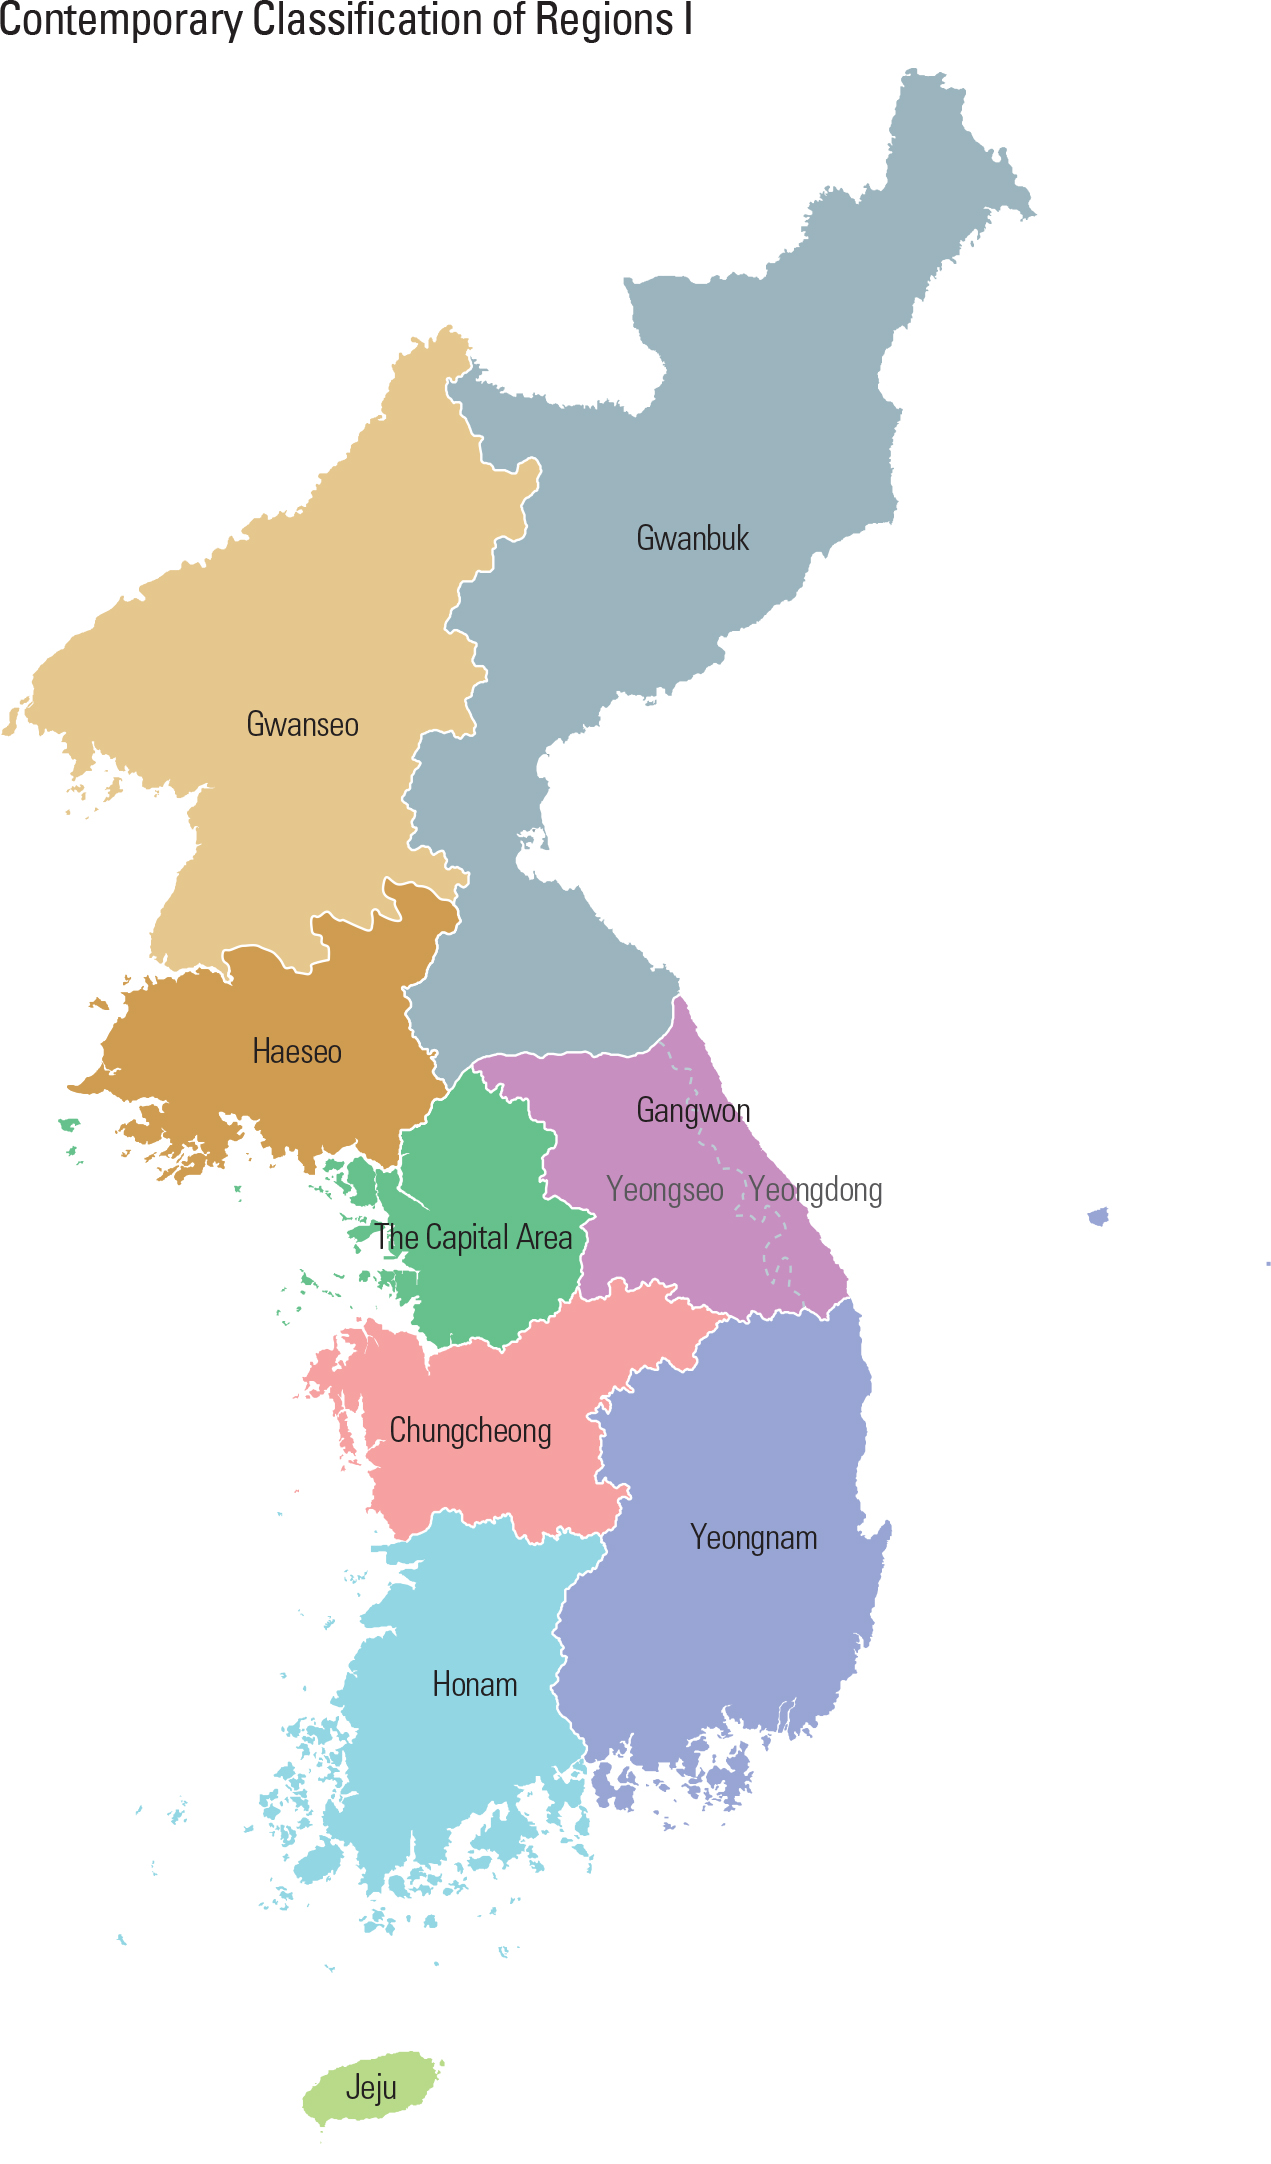  Contemporary Classification of Regions I